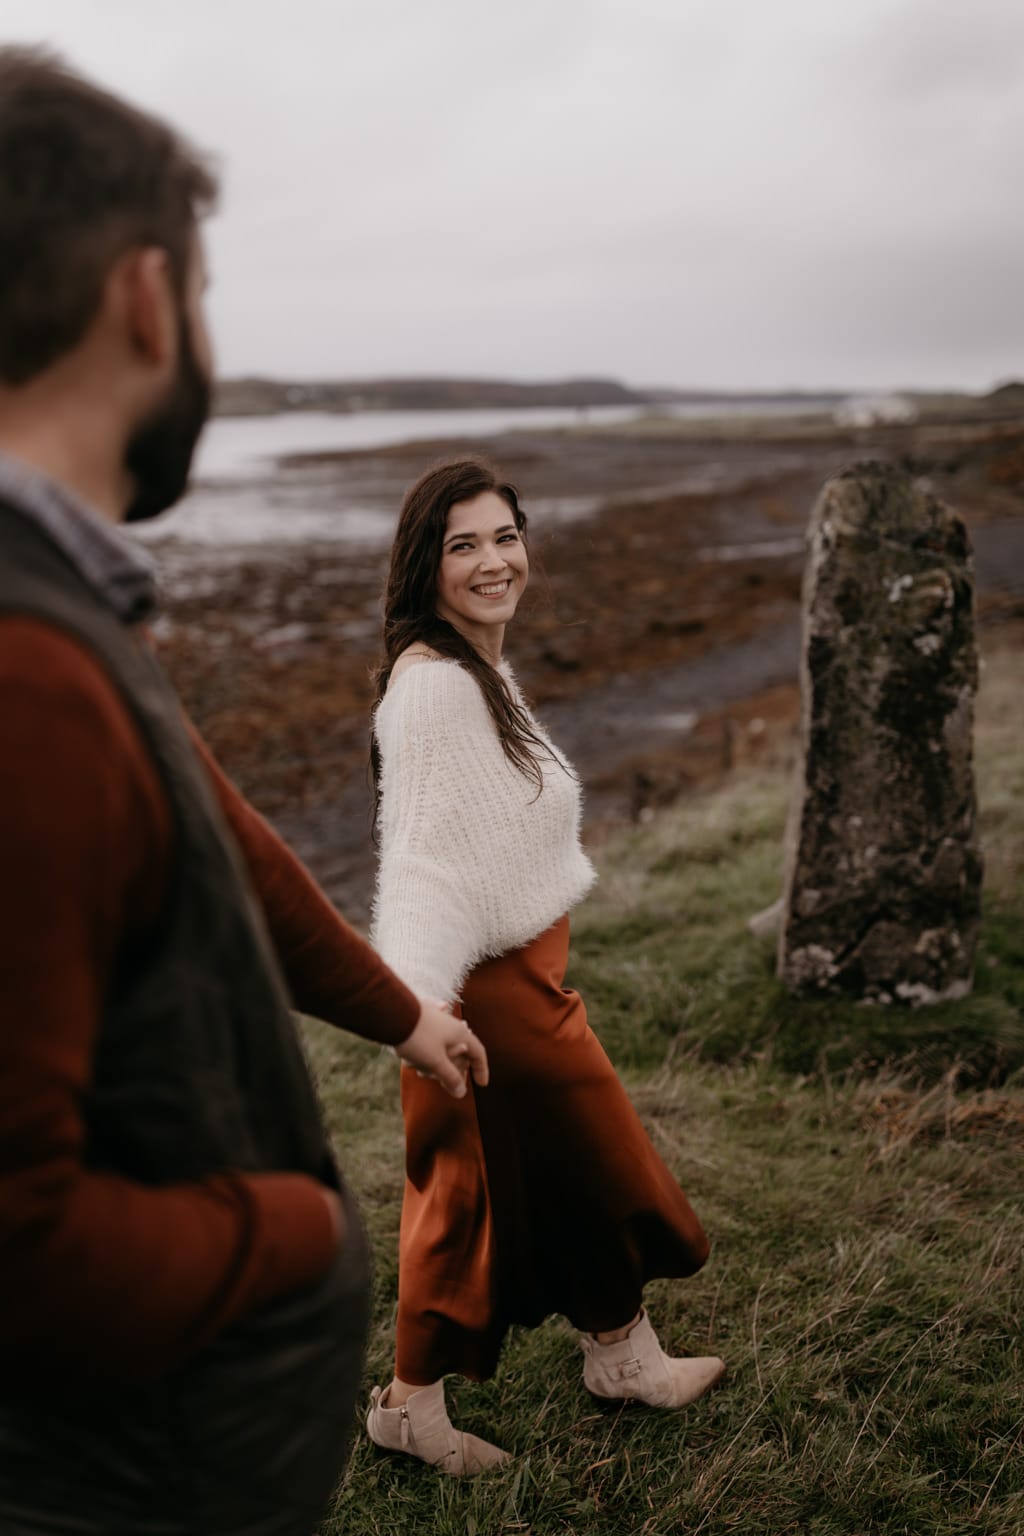 Anniversary couple by standing stones, Isle of Skye 